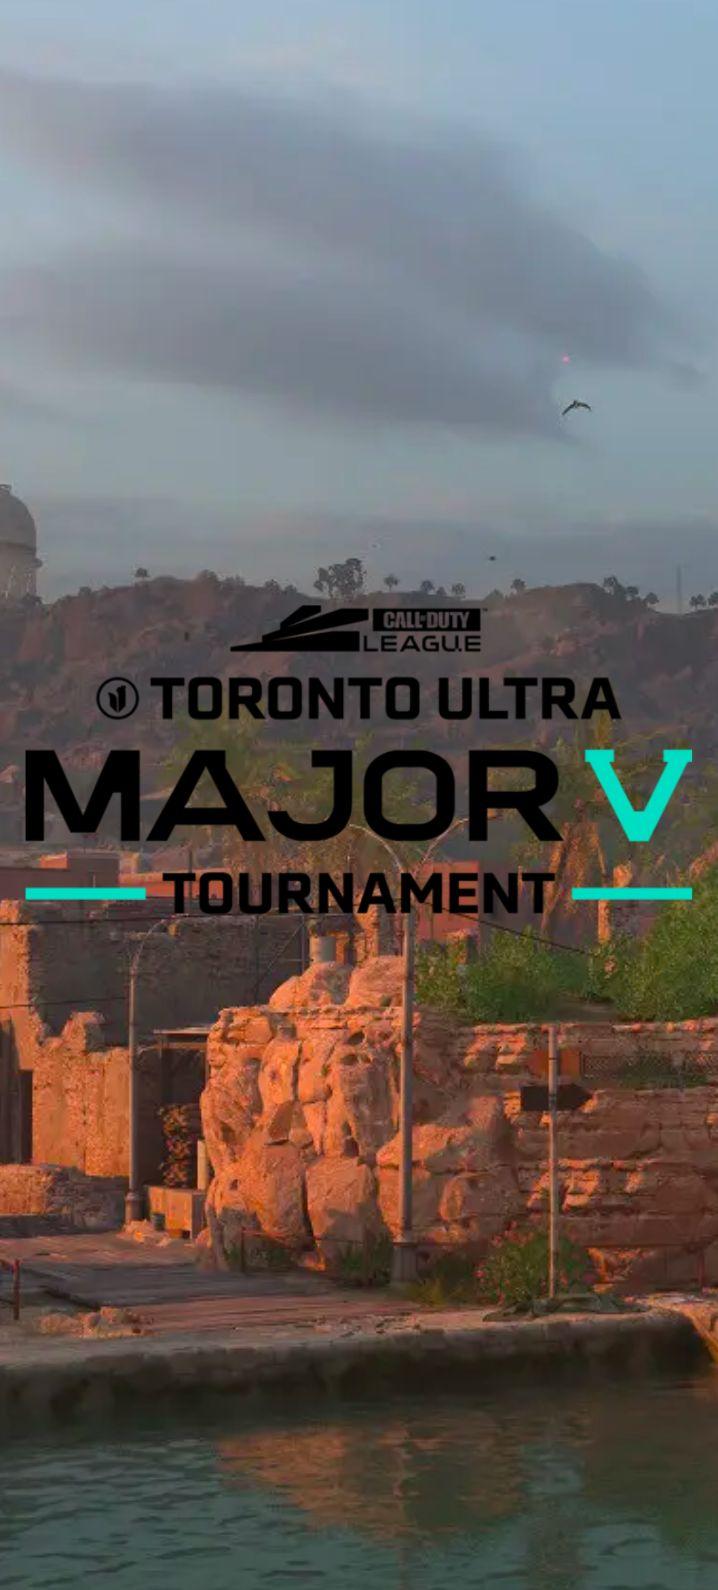 Toronto Ultra Major V Tournament logo on purple and black background